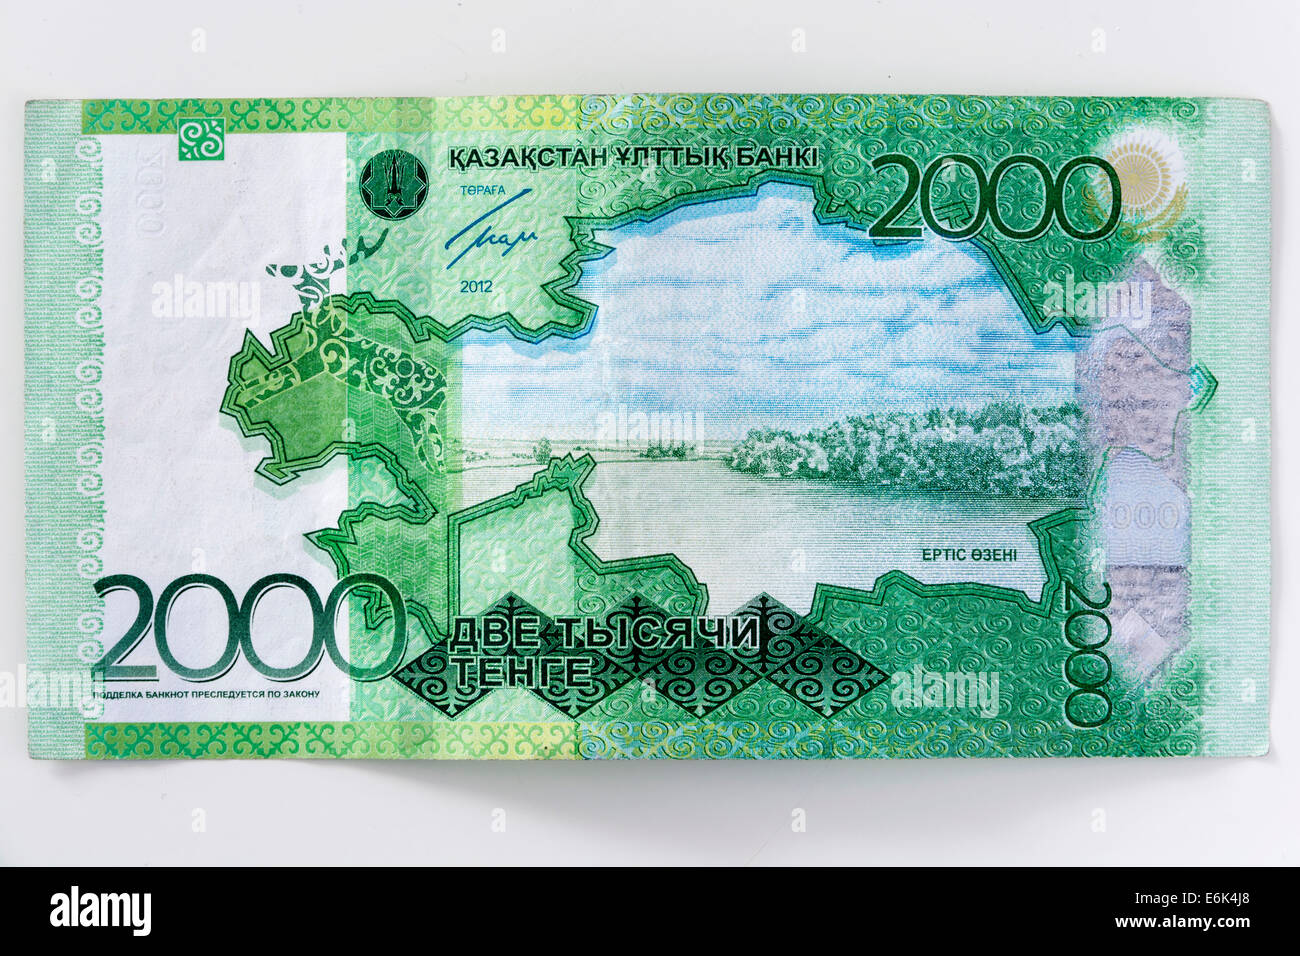 2000 Tenge bill, Kazakhstan Stock Photo